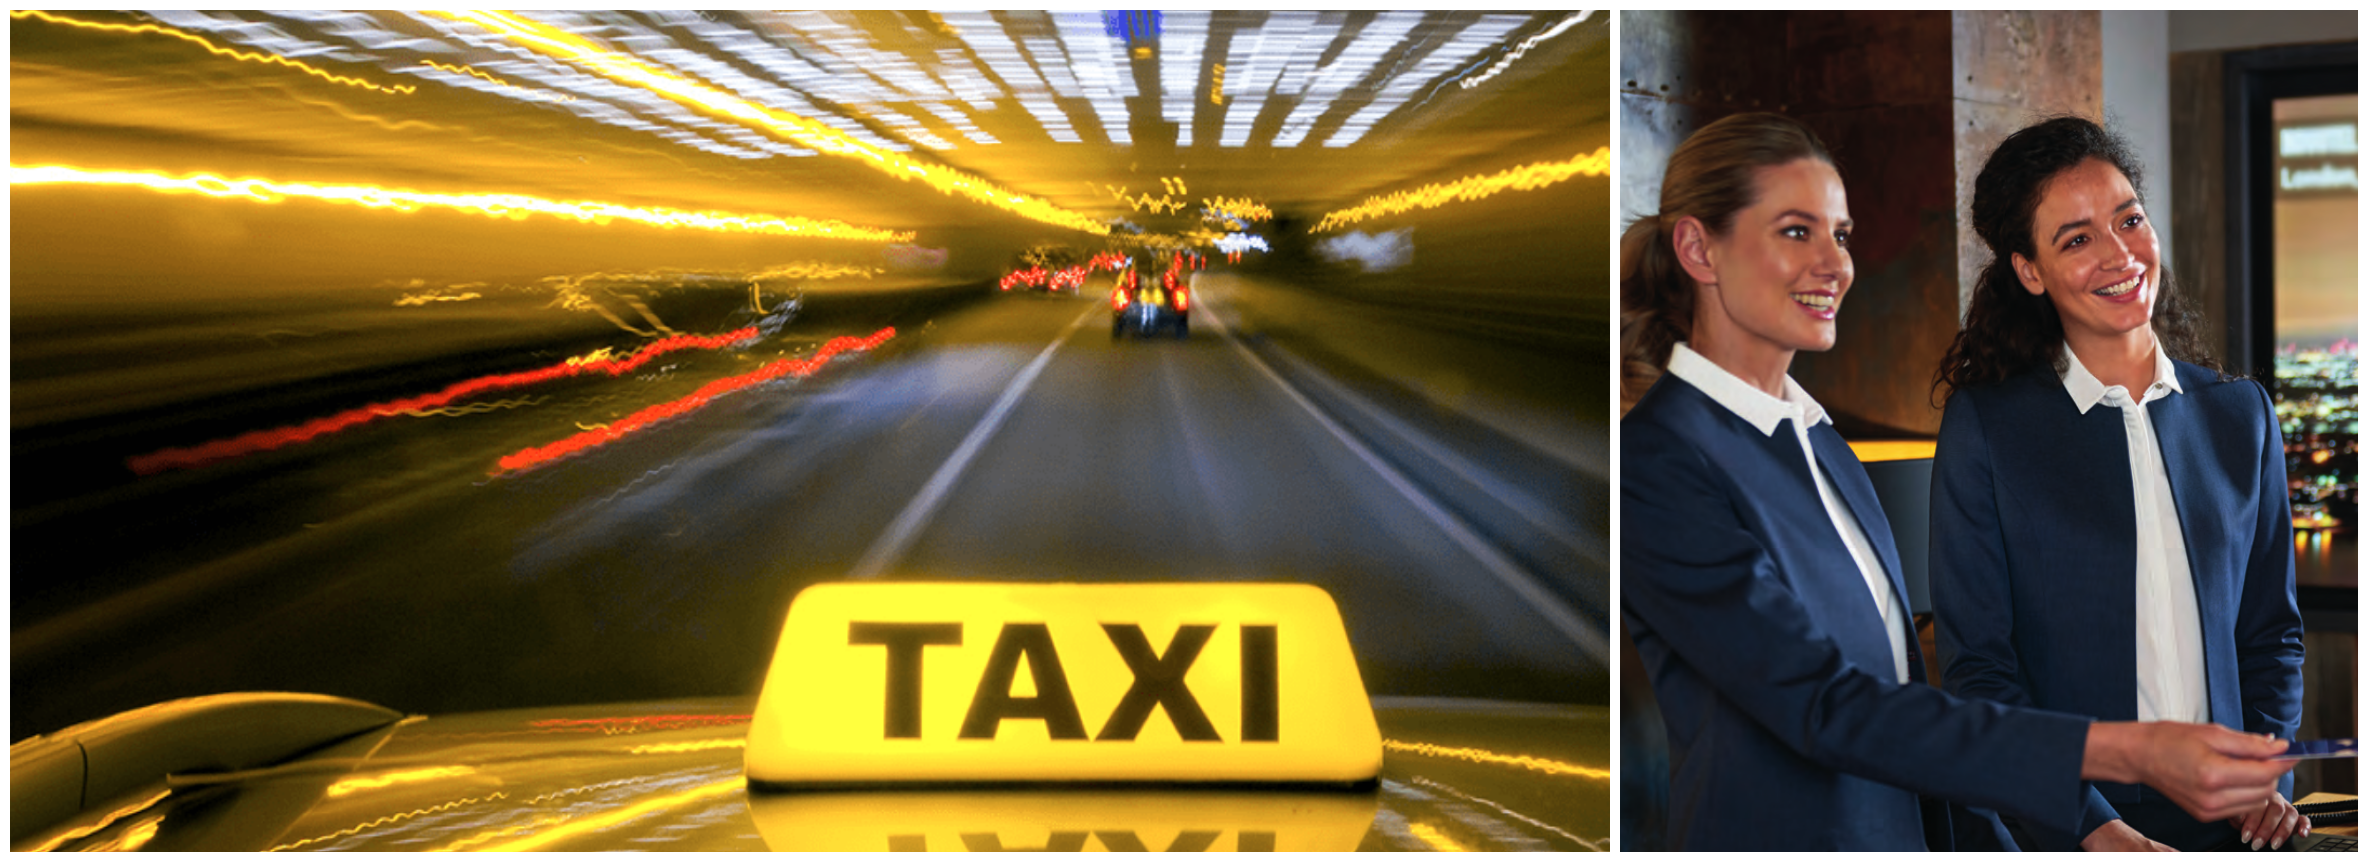 taxi header image